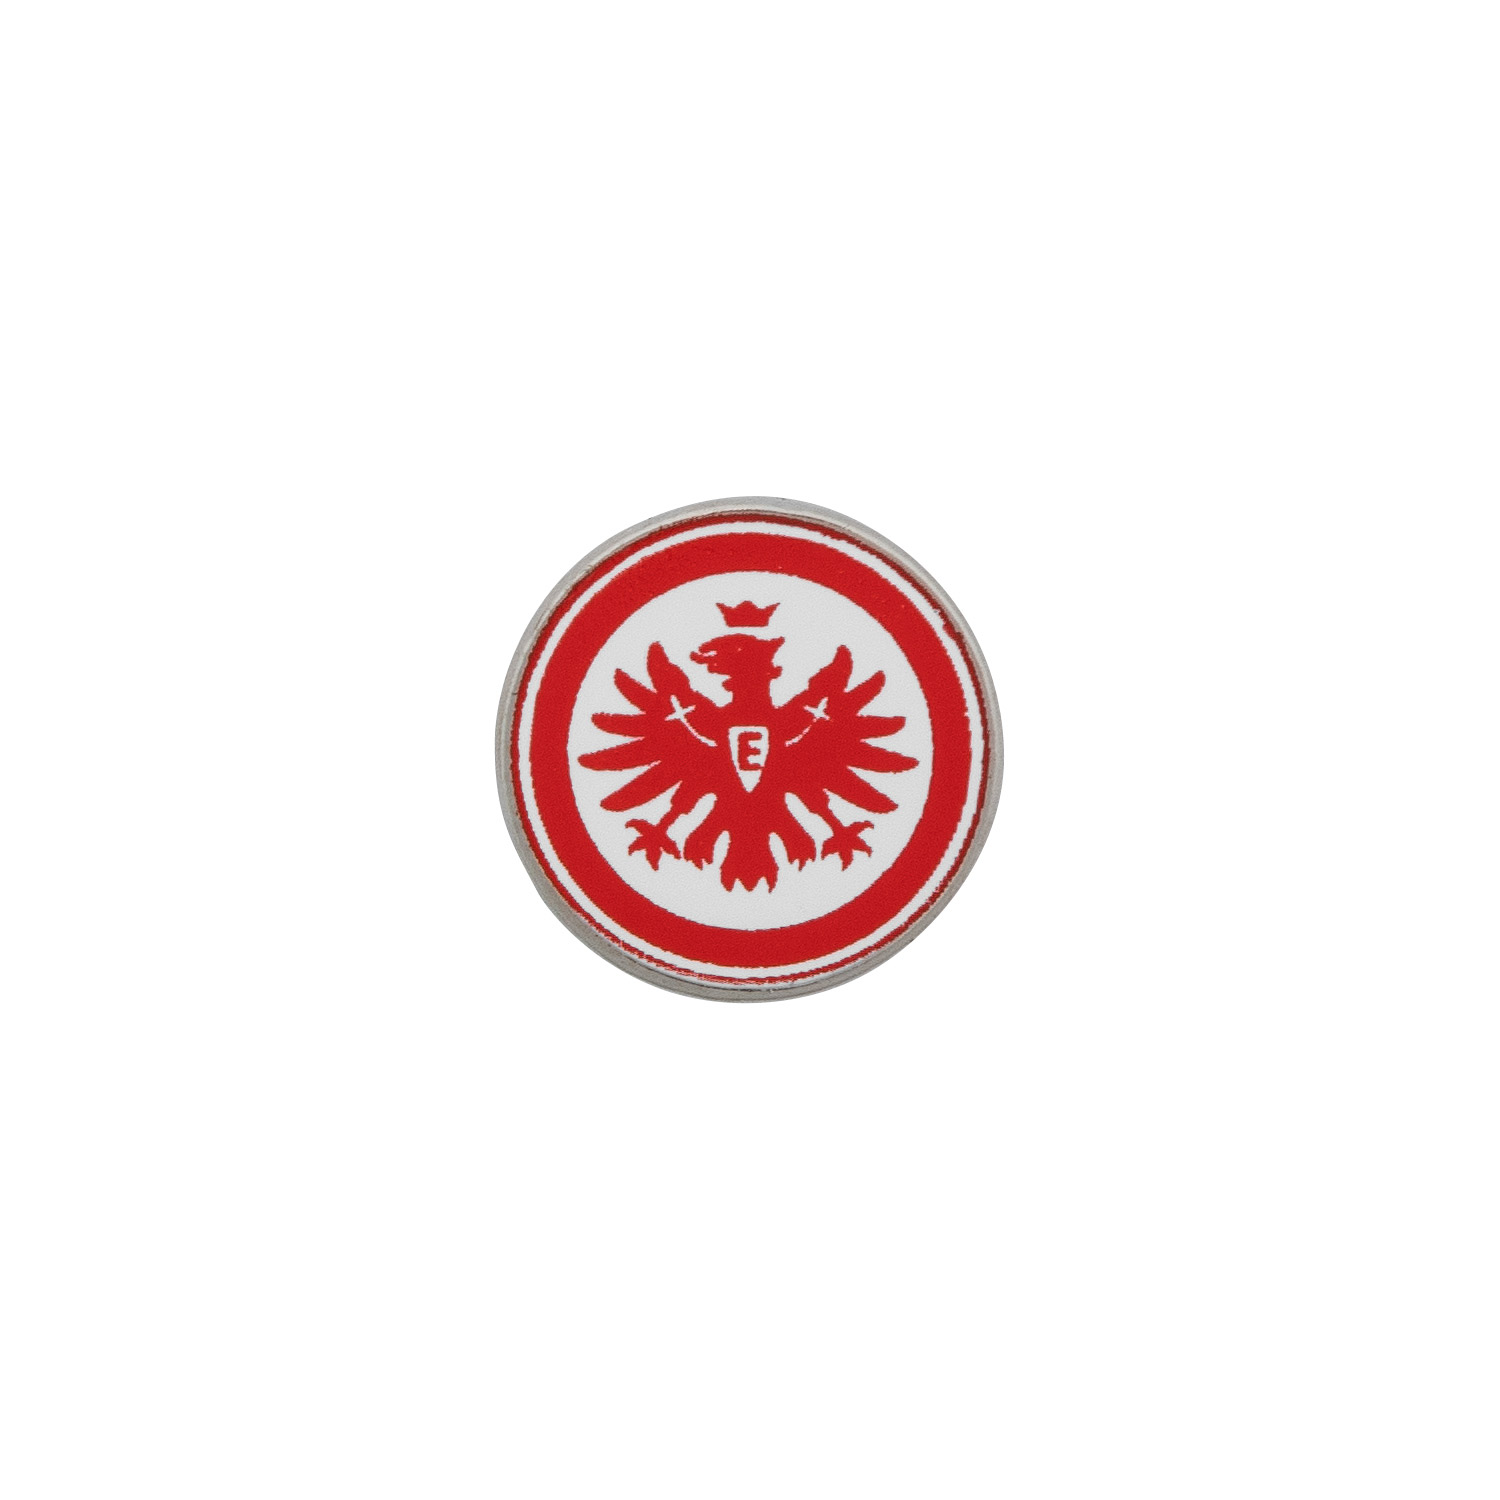 Bild 1: Pin "Logo" Rot